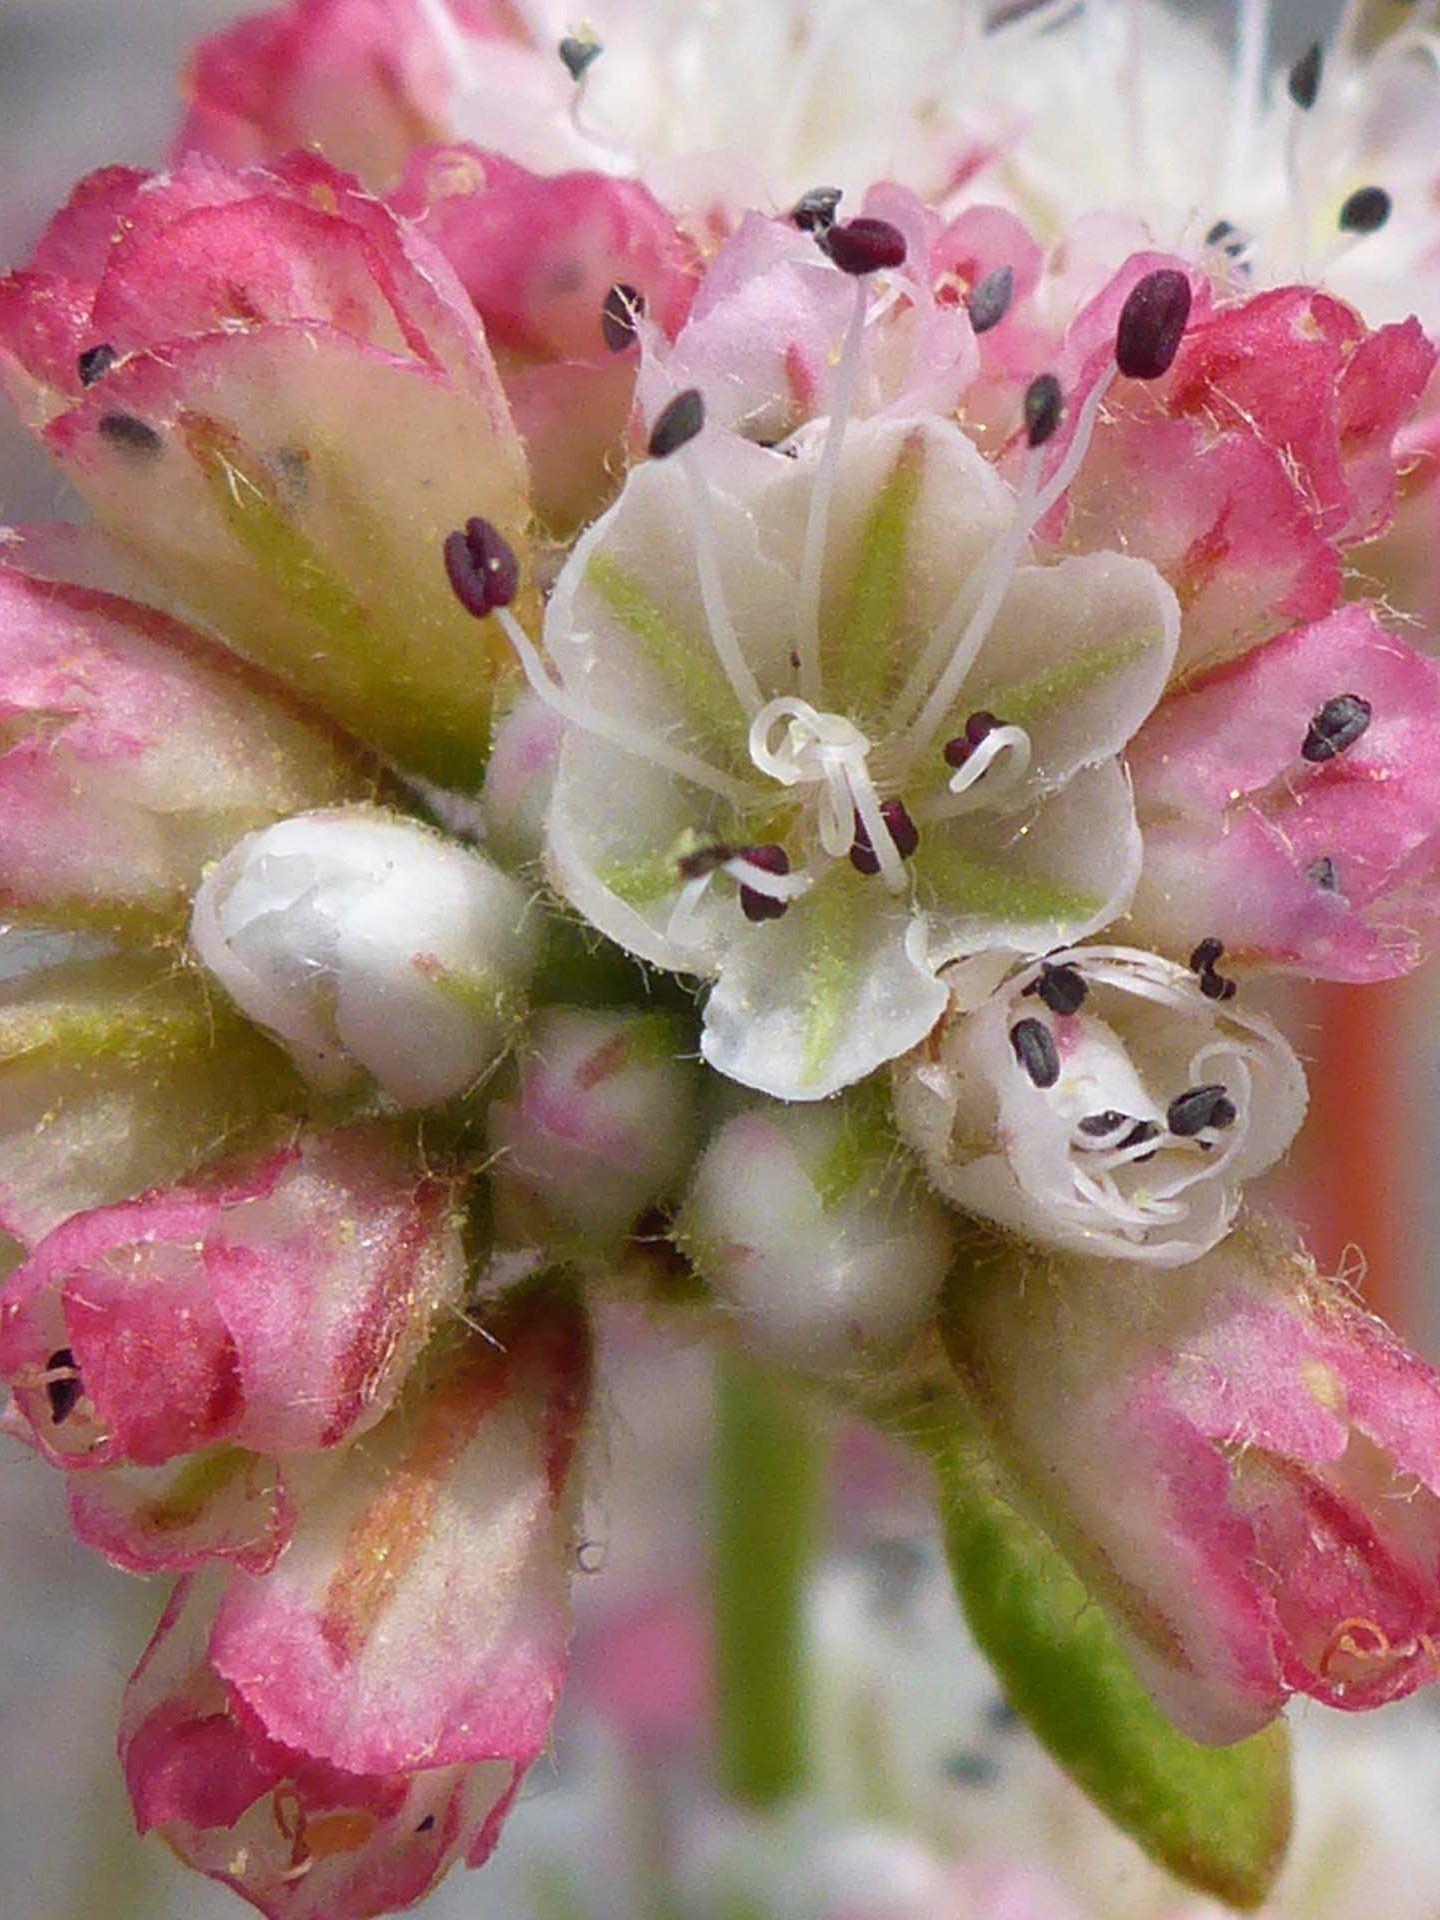 Pyrola-leaved buckwheat close-up. D. Burk